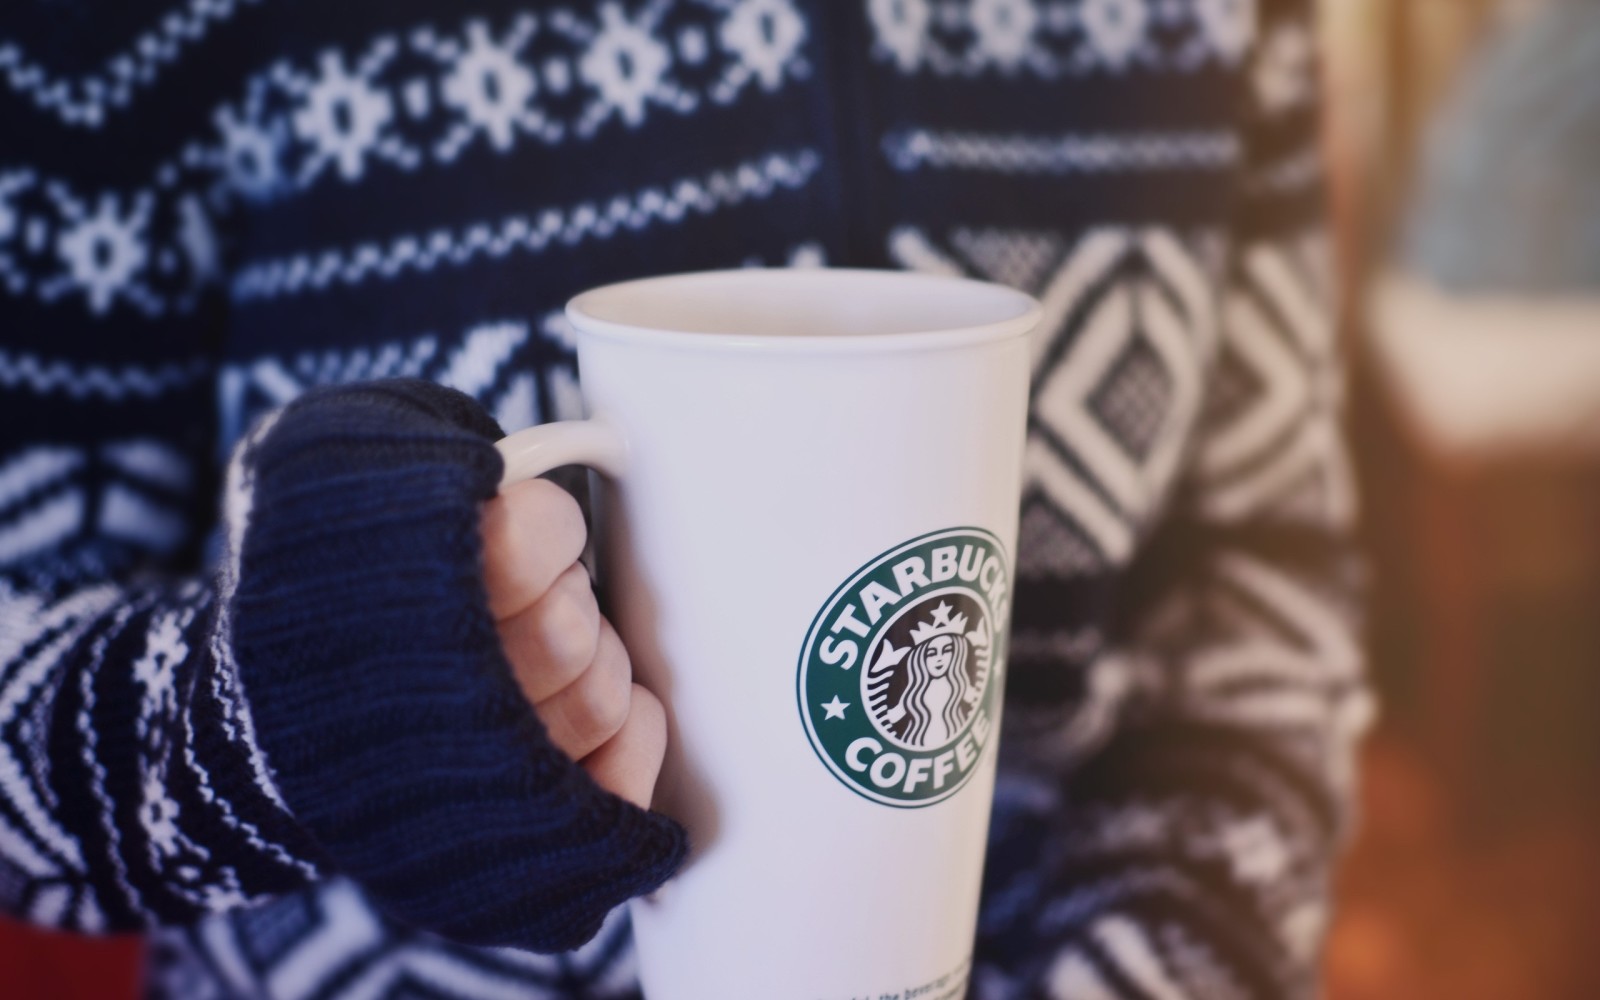 gadis, tangan, musim dingin, kaca, kopi, sweater, Starbucks